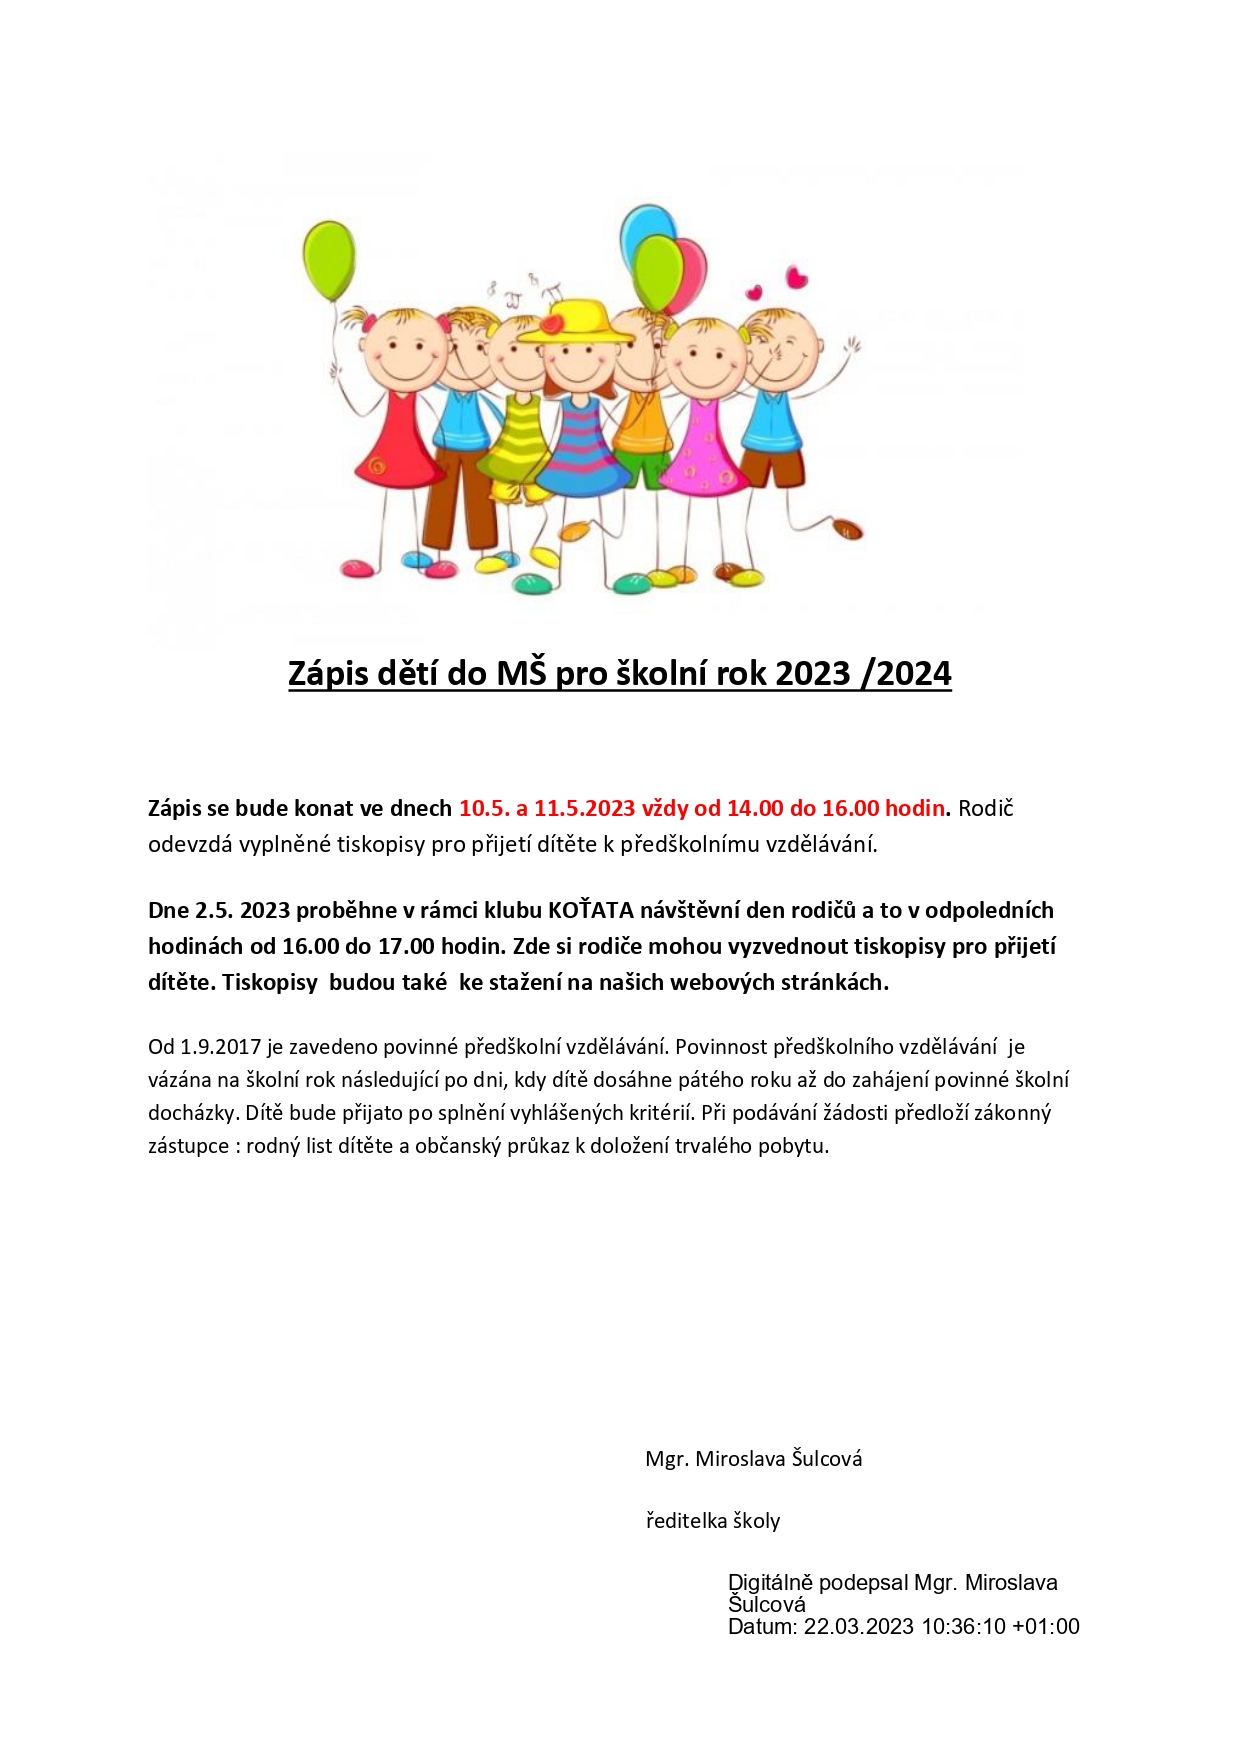 Zapis-deti-do-MS-pro-skolni-rok-2023-24-sign-page-0001